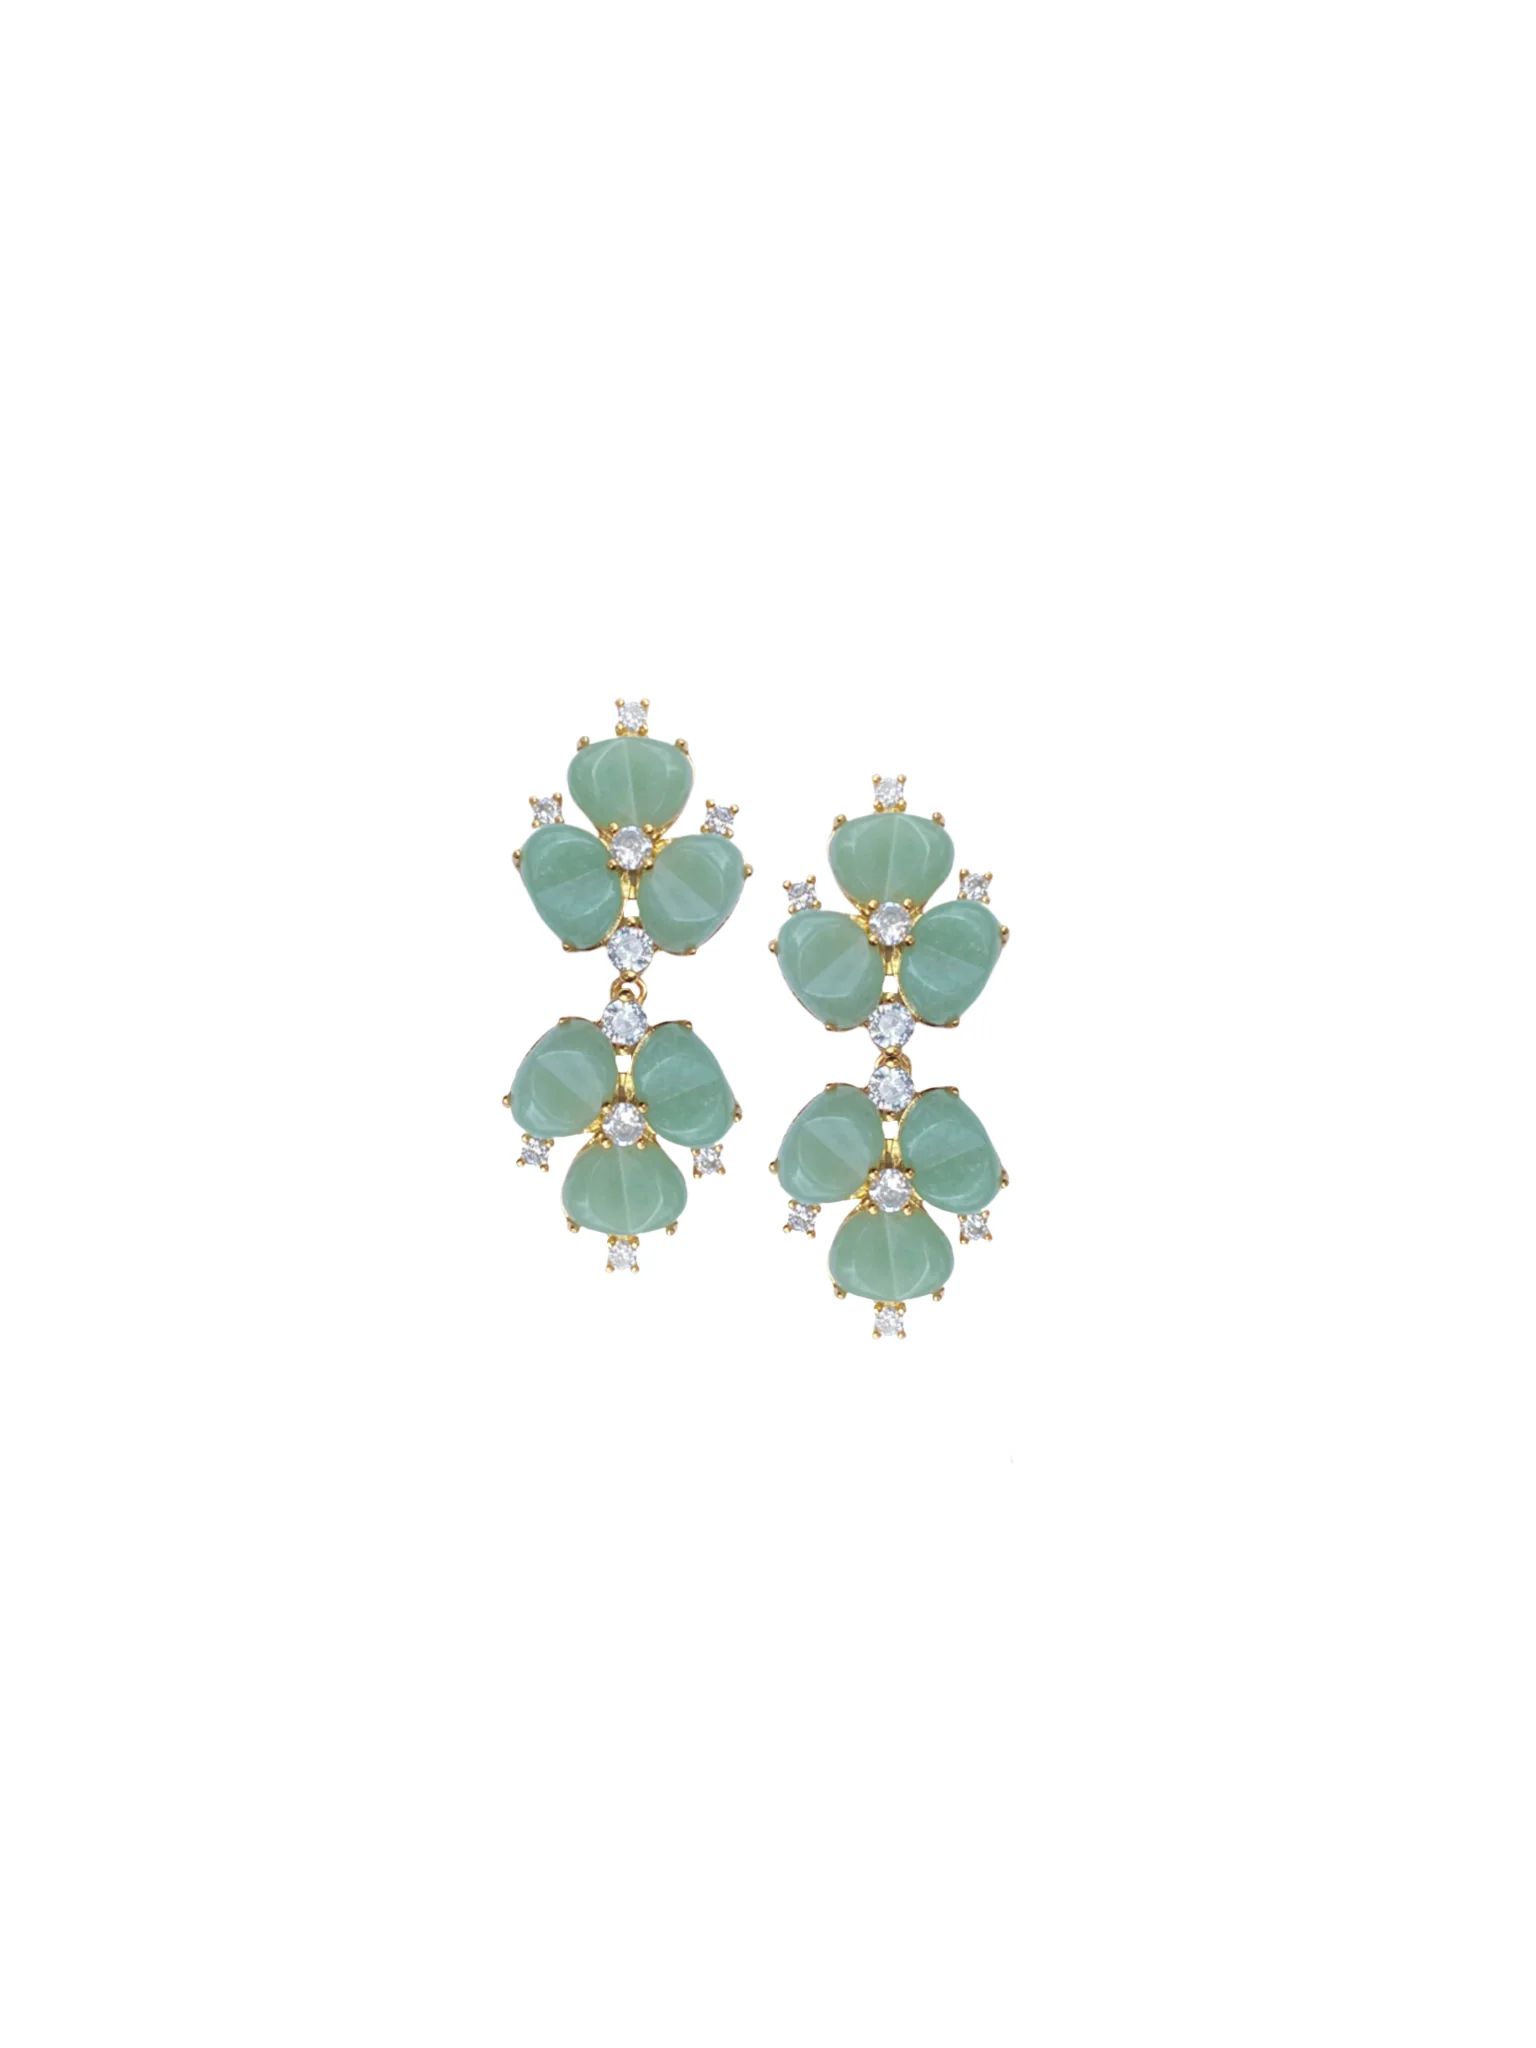 Petite Jade Clover Drops | Nicola Bathie Jewelry